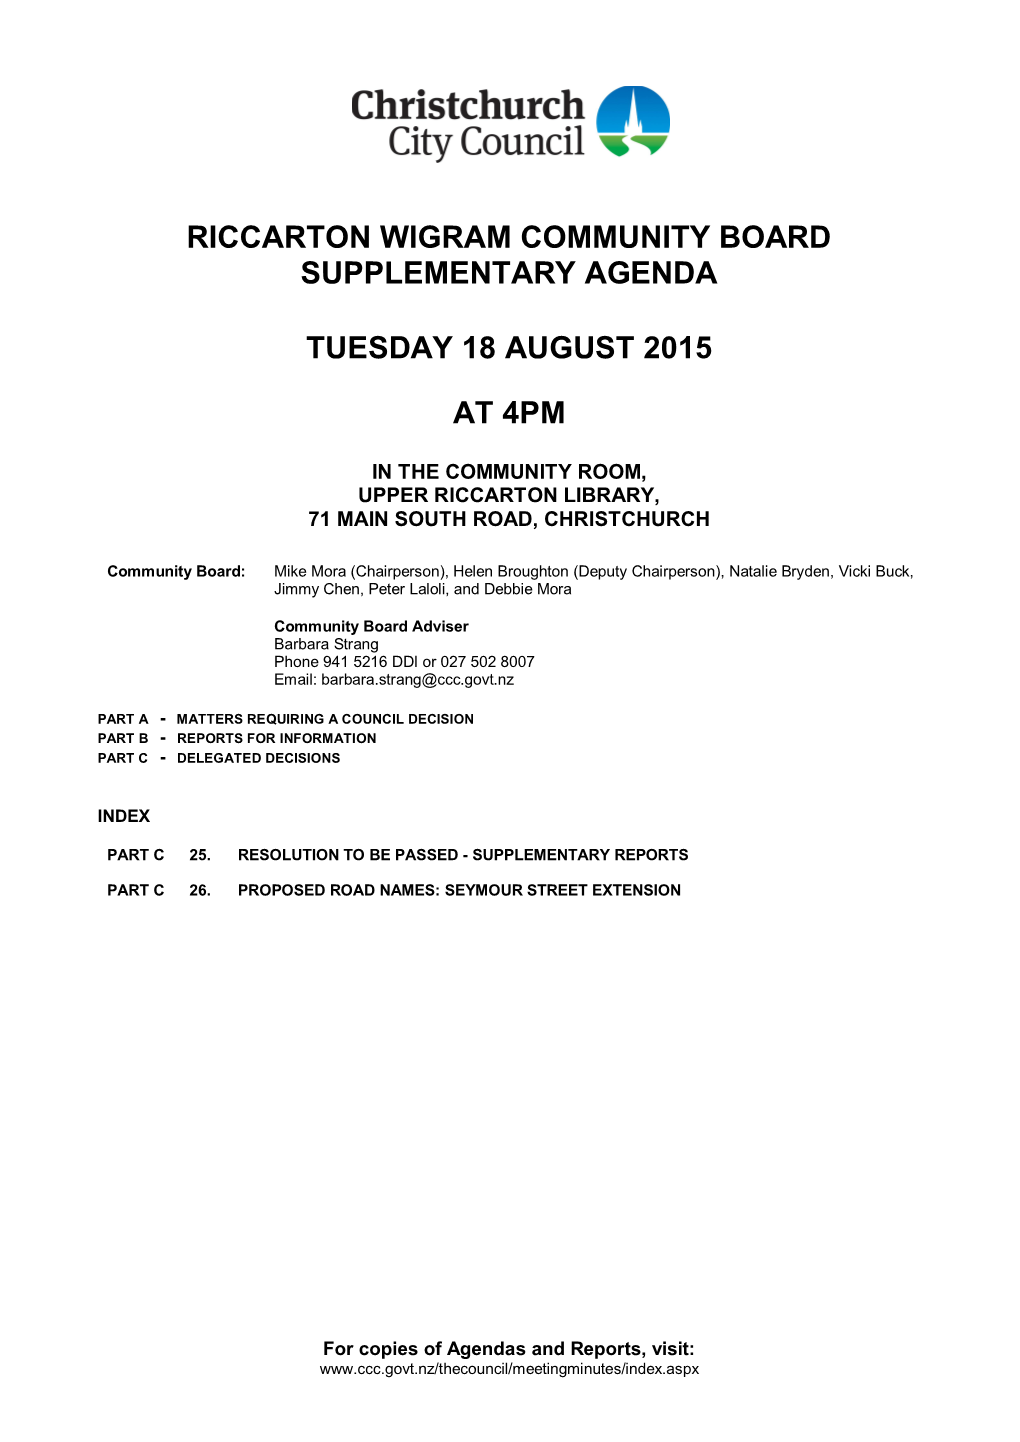 Riccarton Wigram Community Board 18 August 2015 Supplementary